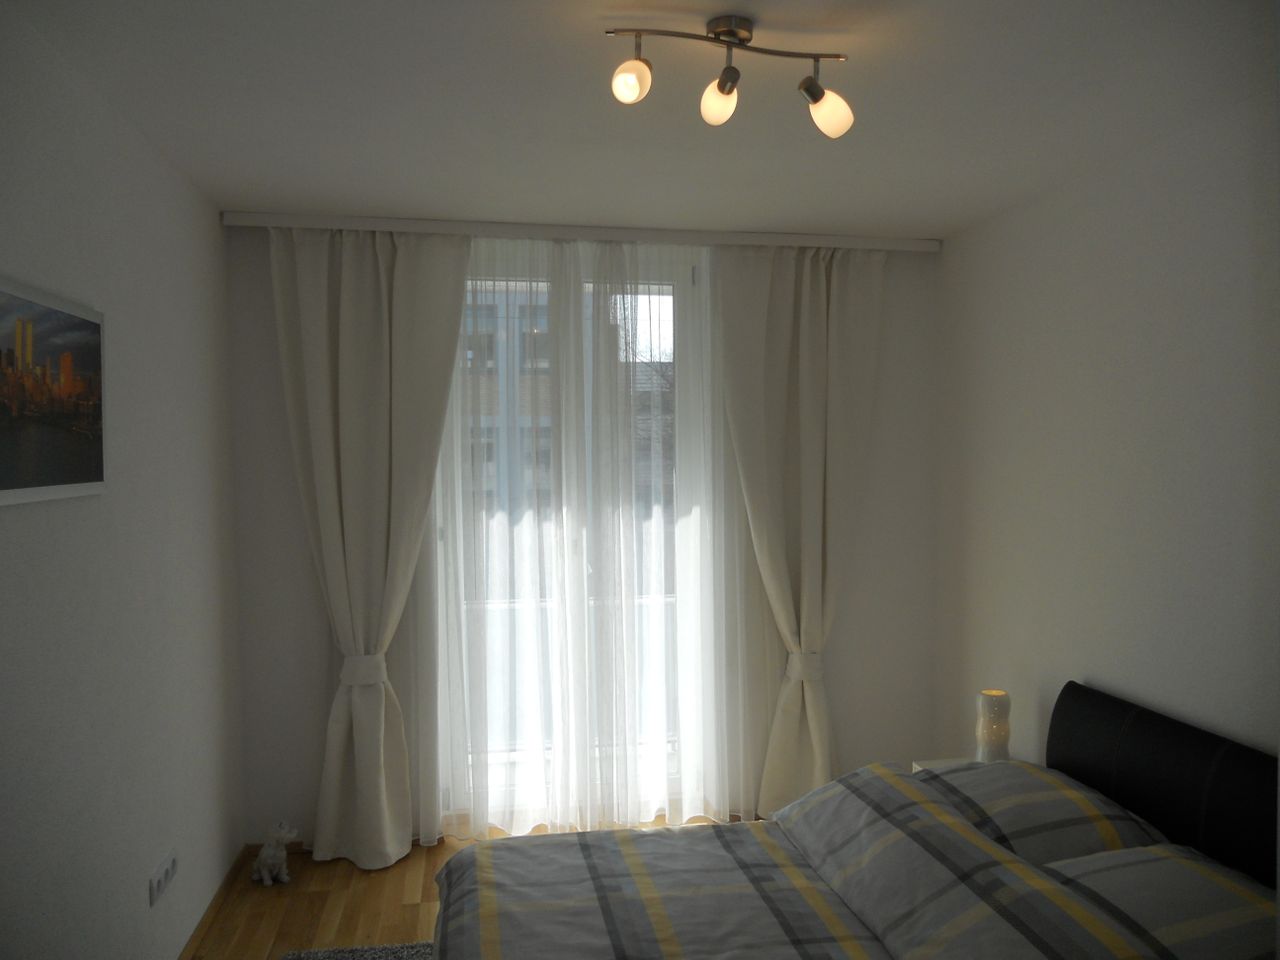 Wonderful 3 room flat located in München